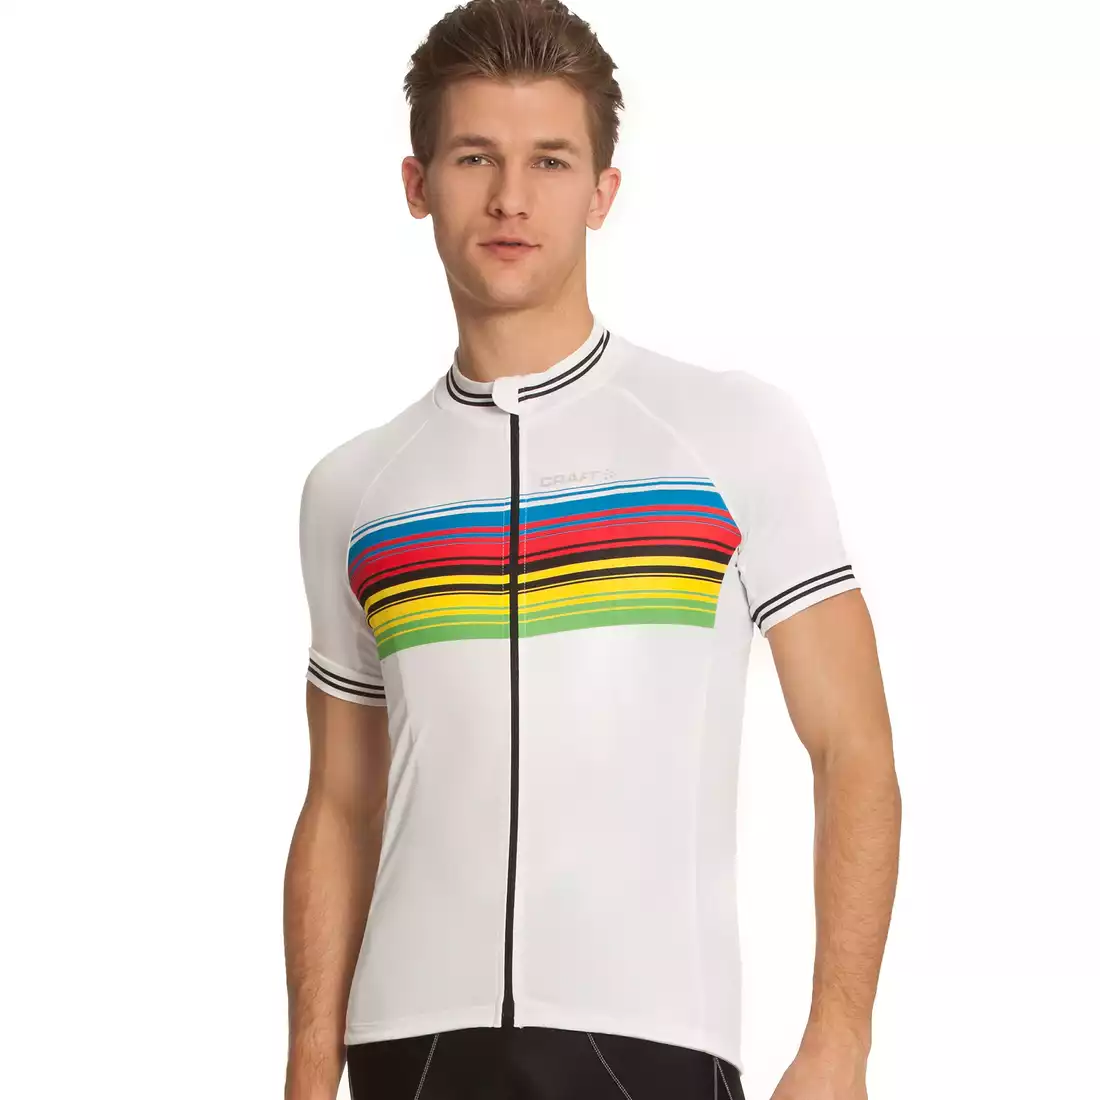 CRAFT ACTIVE BIKE CHAMP męska koszulka rowerowa 1902583-2900, kolor: biały